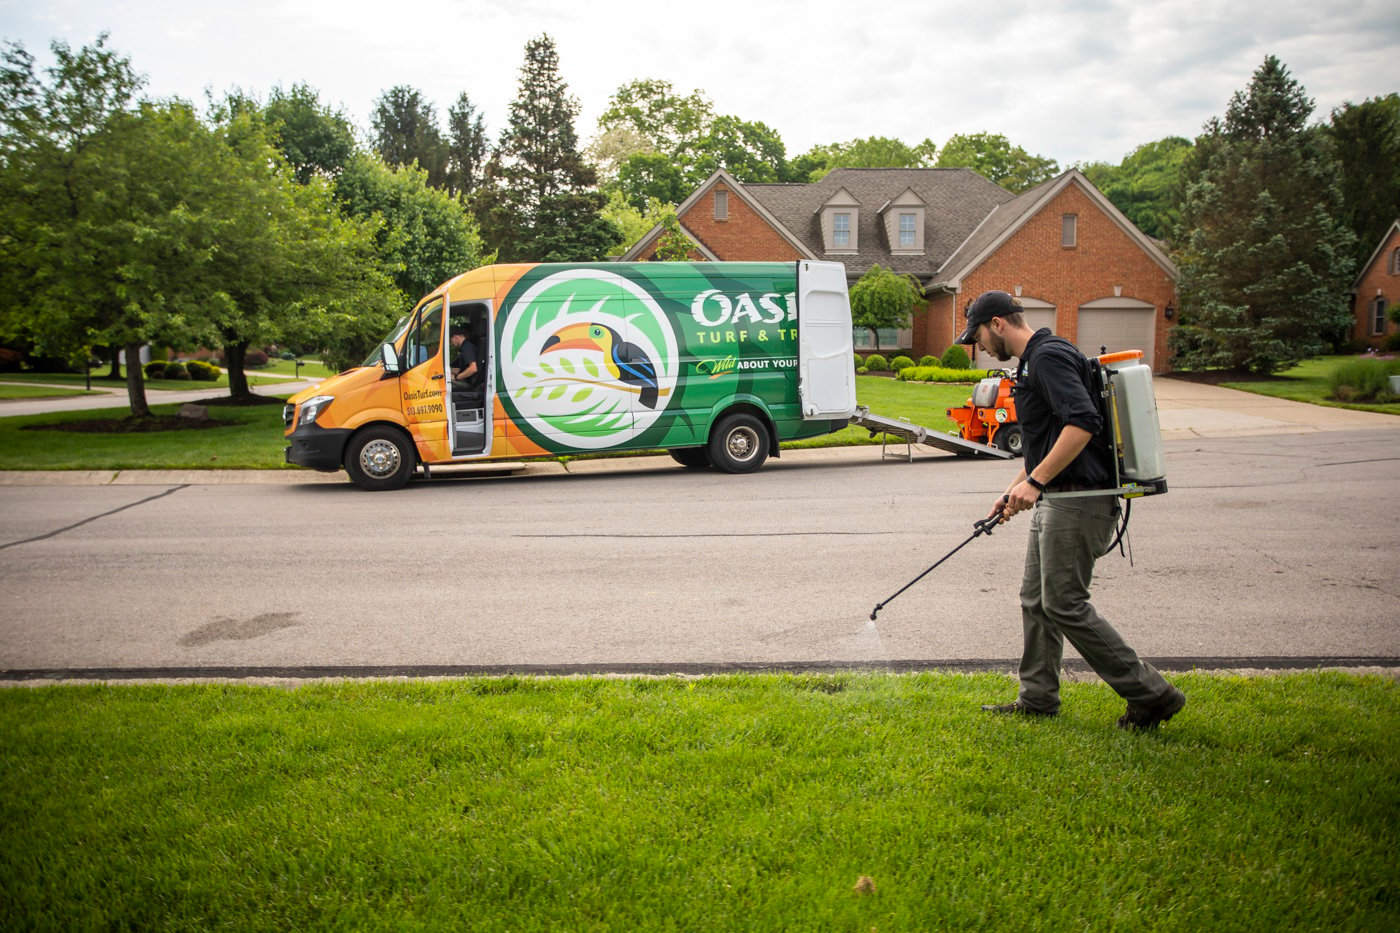 Oasis lawn care technician spraying lawn